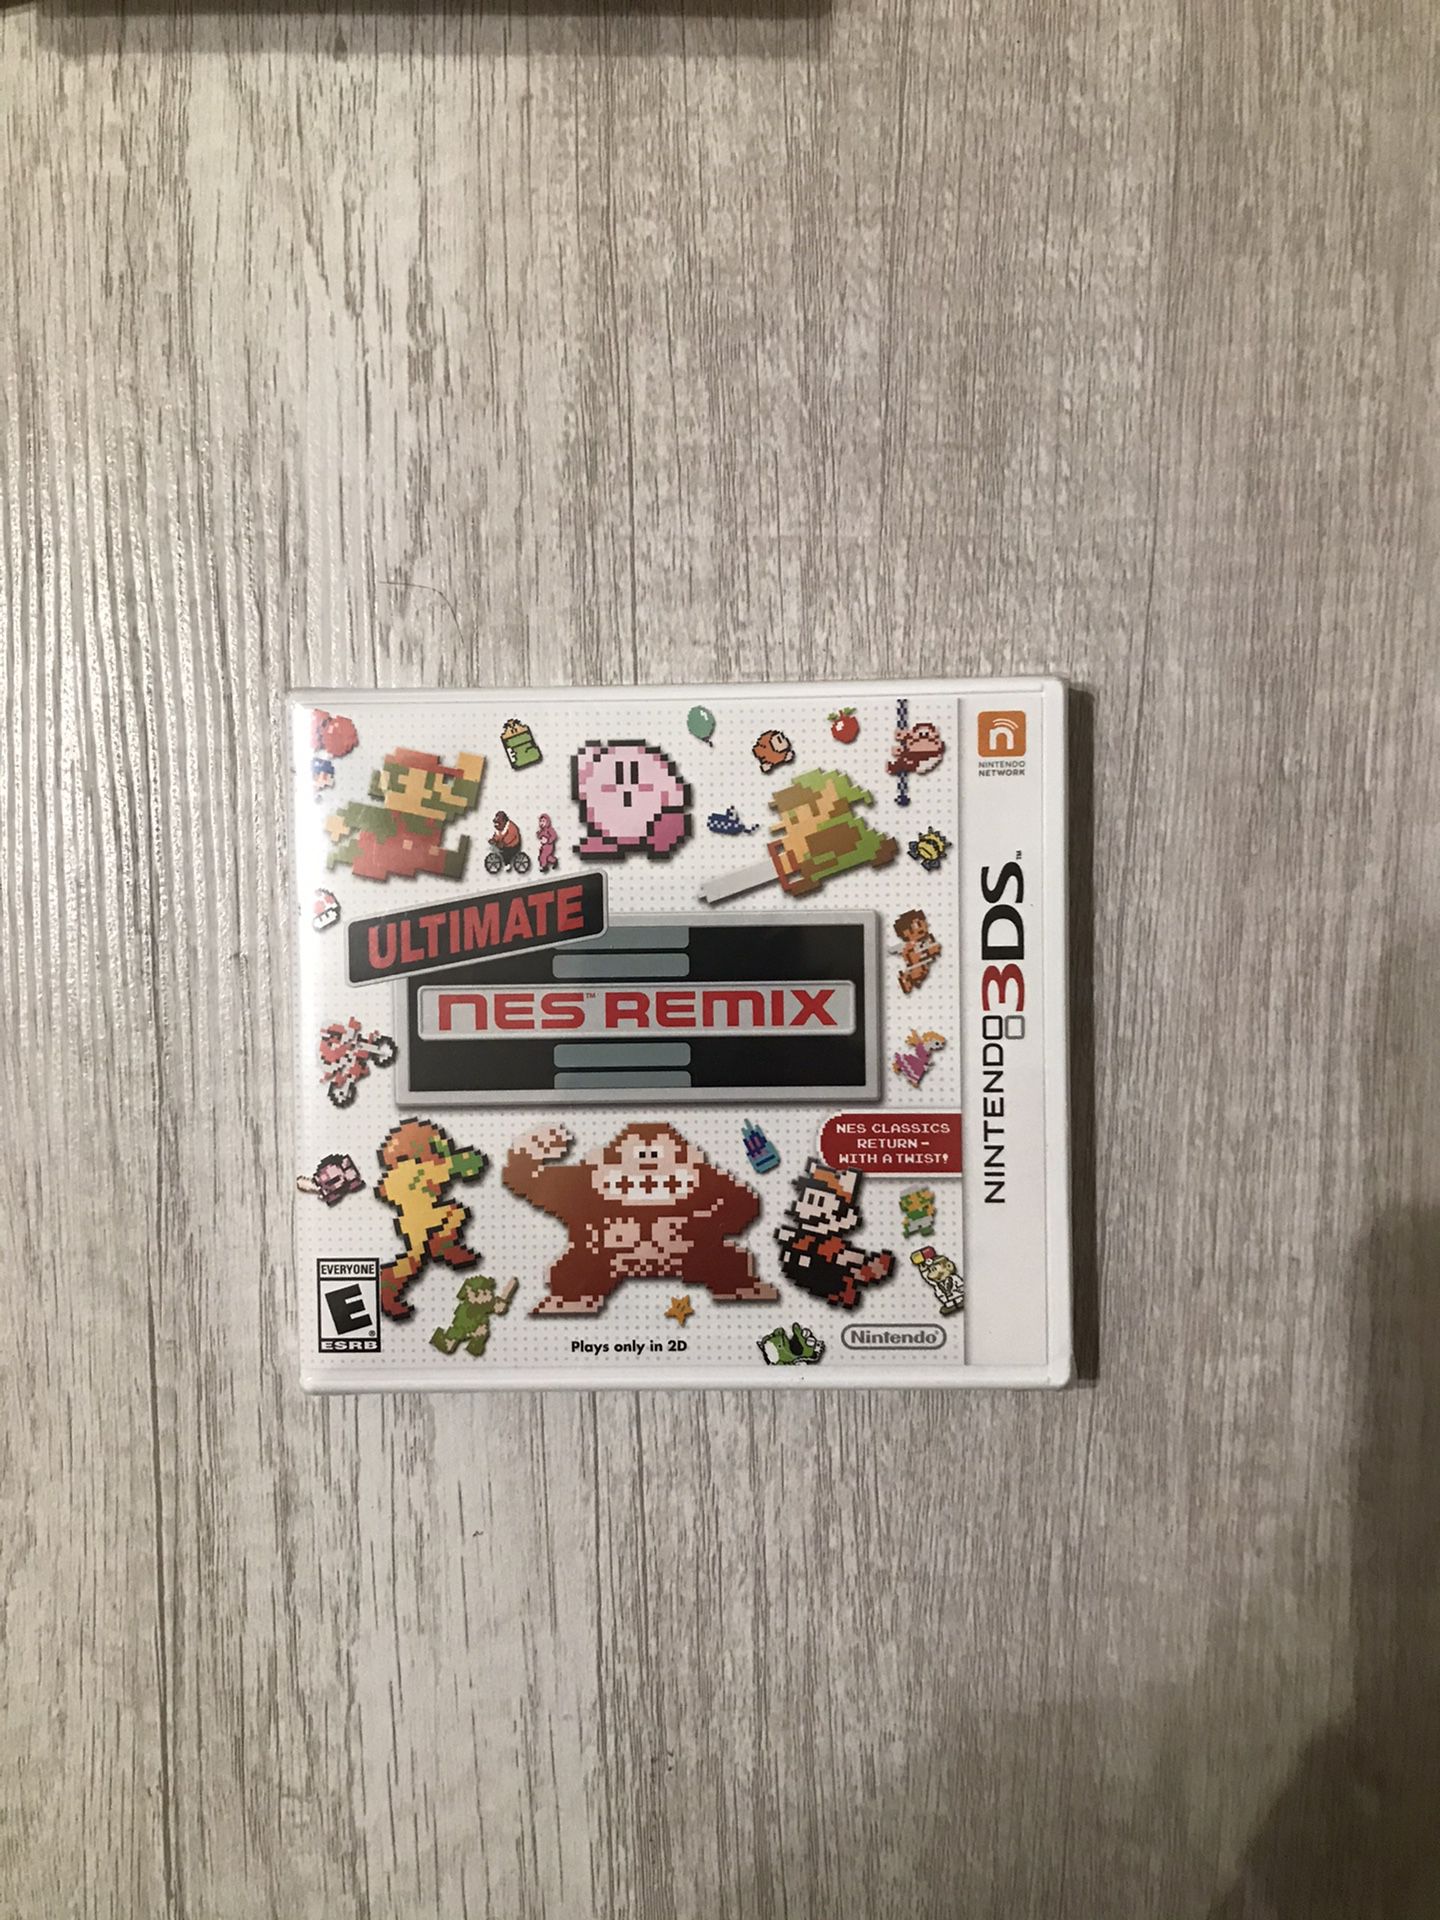 Nes ultimate remix Nintendo 3ds